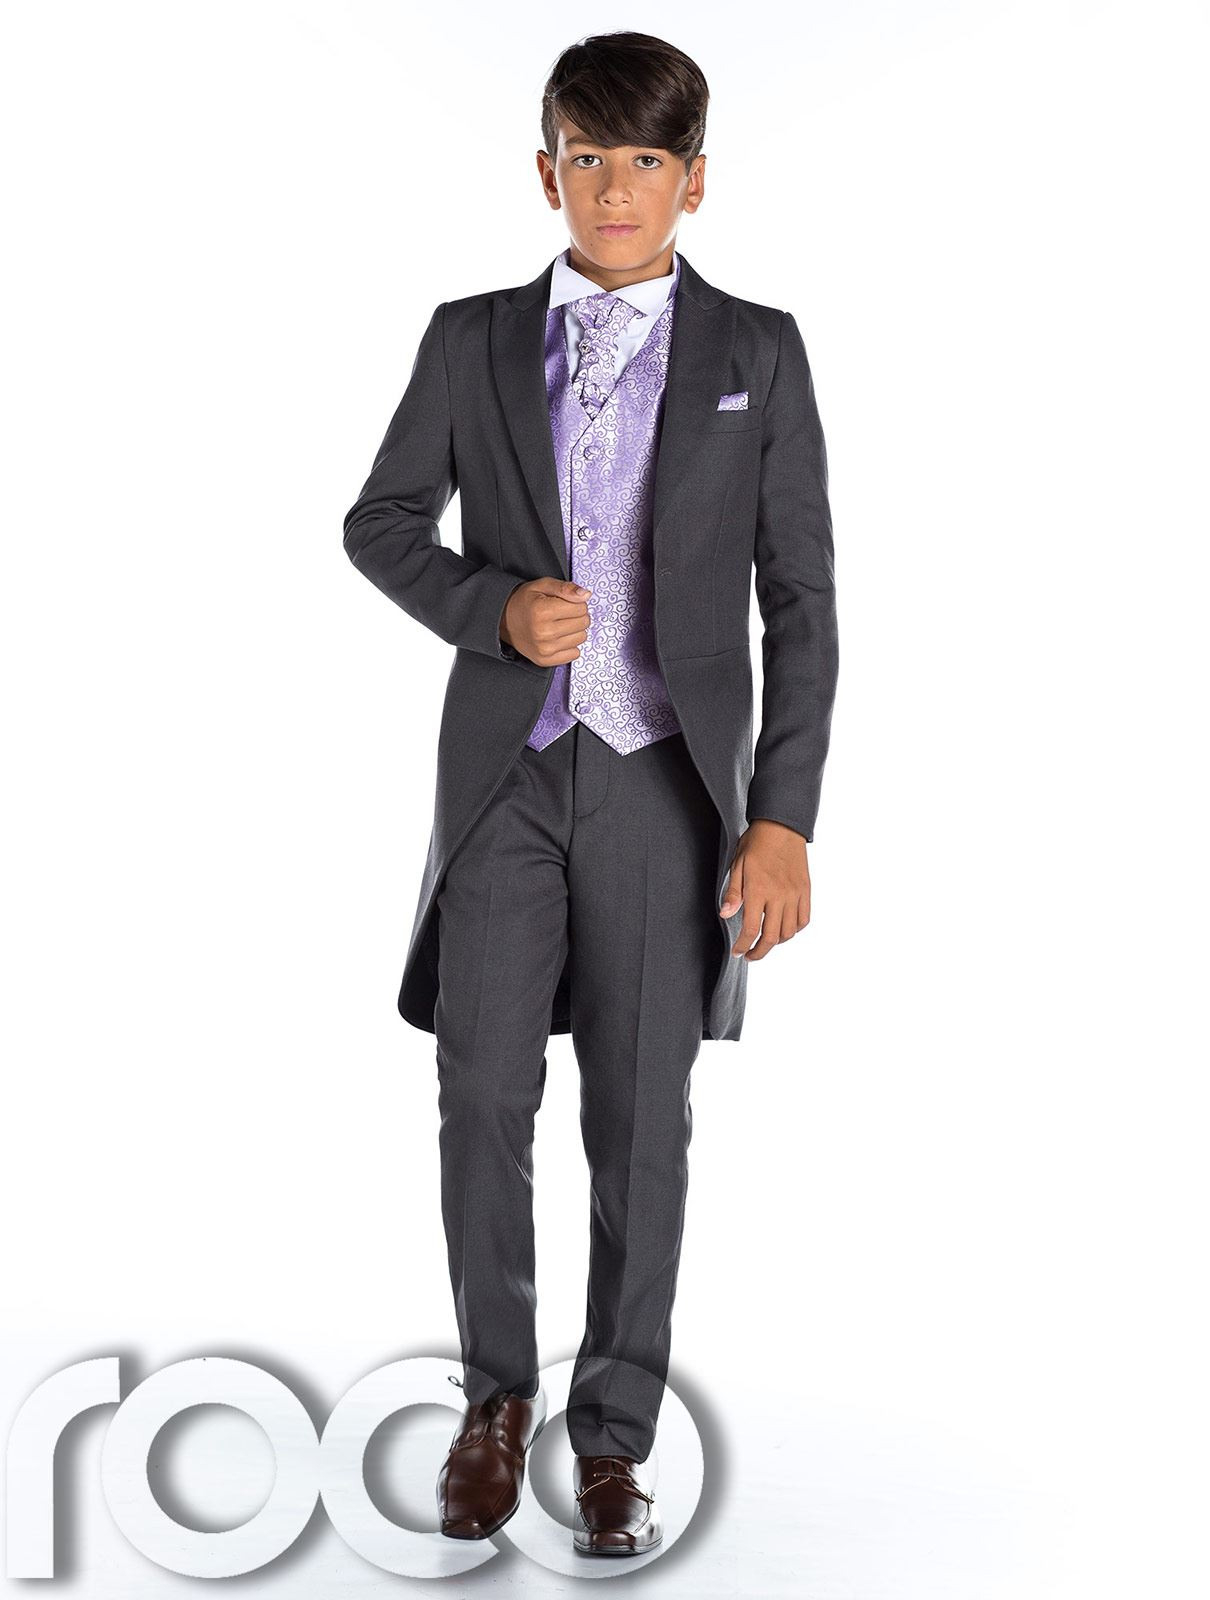 Grau Frack Anzug Jungen Hochzeit Outfits Promanzug